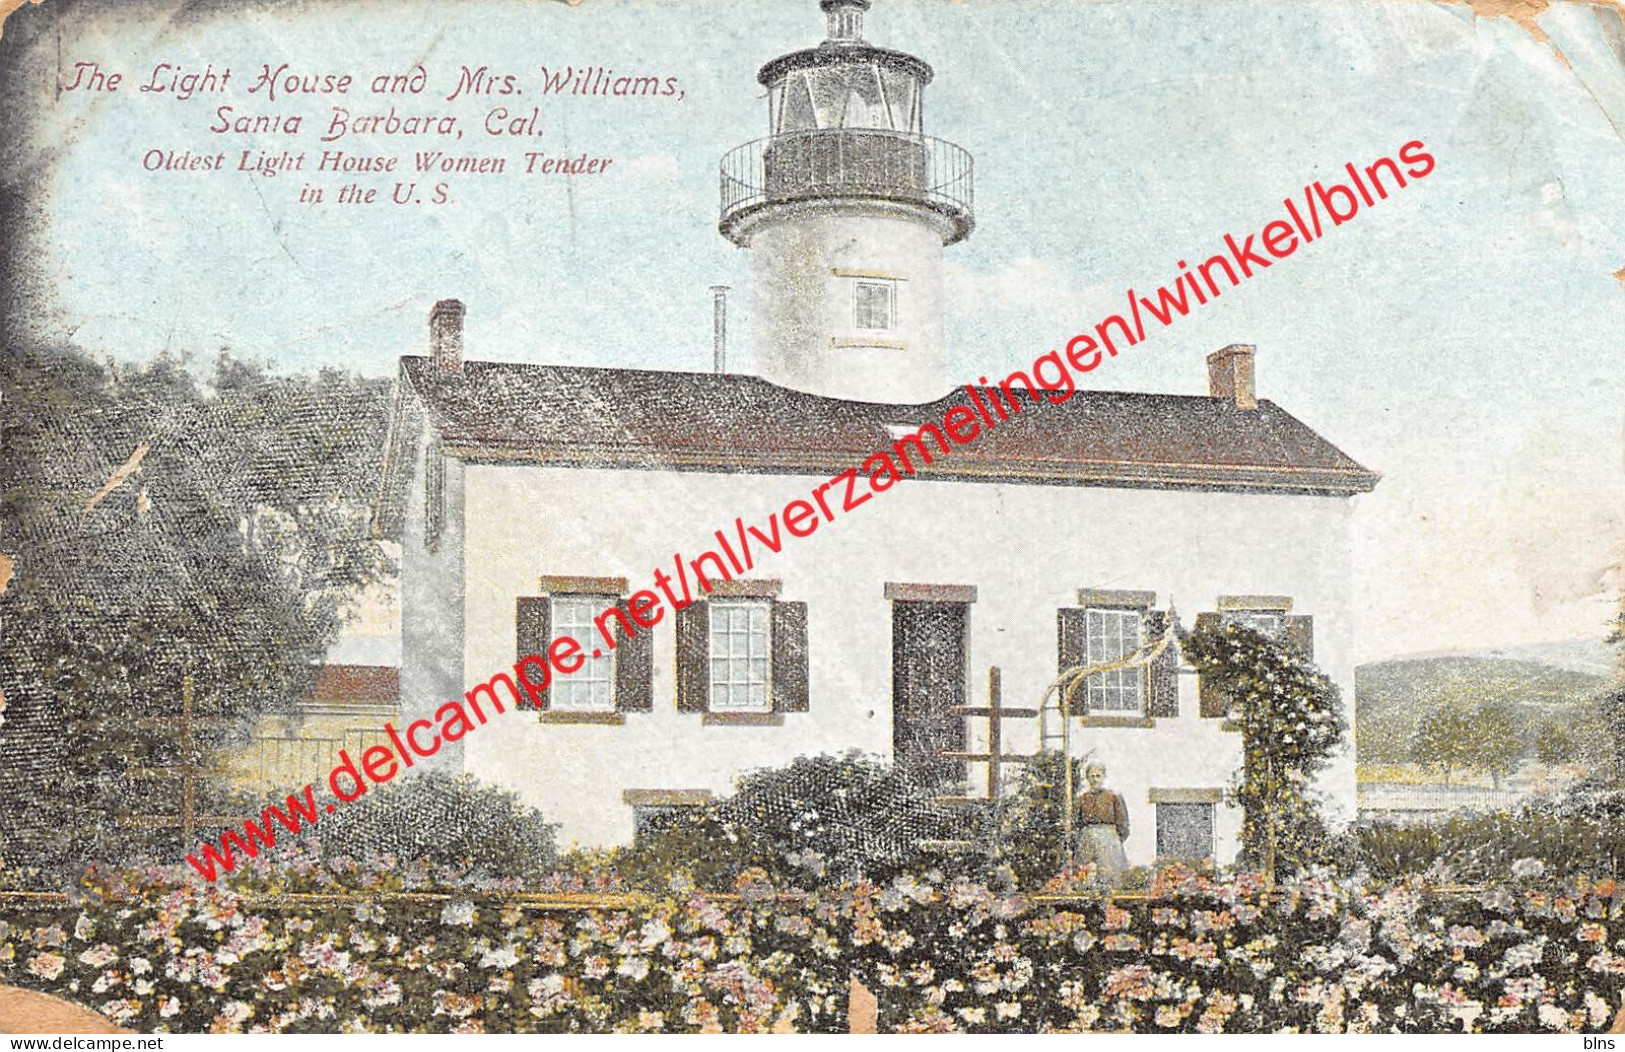 Santa Barbara - The Light House And Mrs. Williams - Oldest Light House Women Tender In The U.S. - Santa Barbara